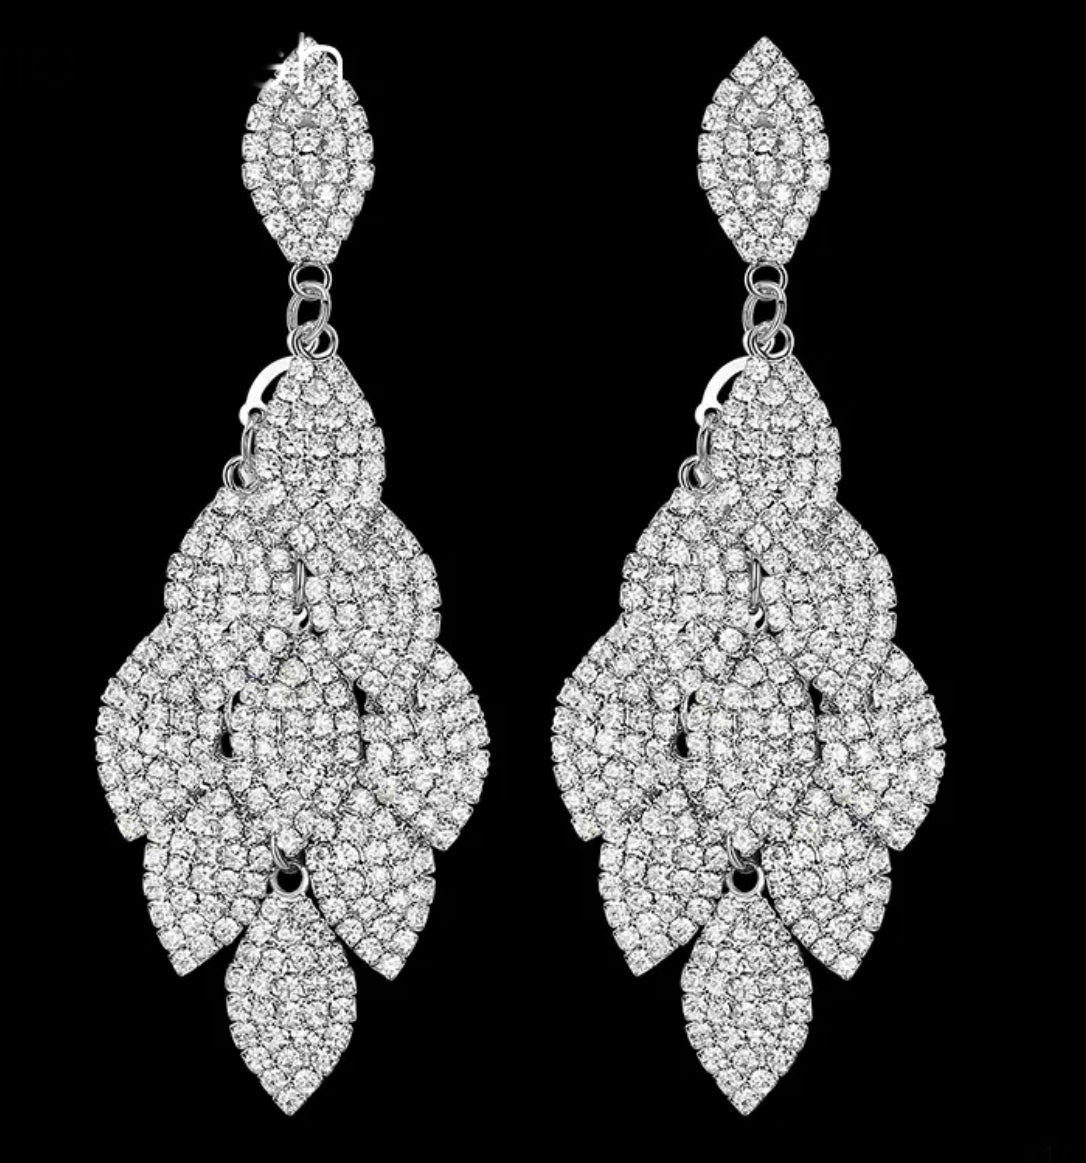 Selina - clear silver pave rhinestone earrings